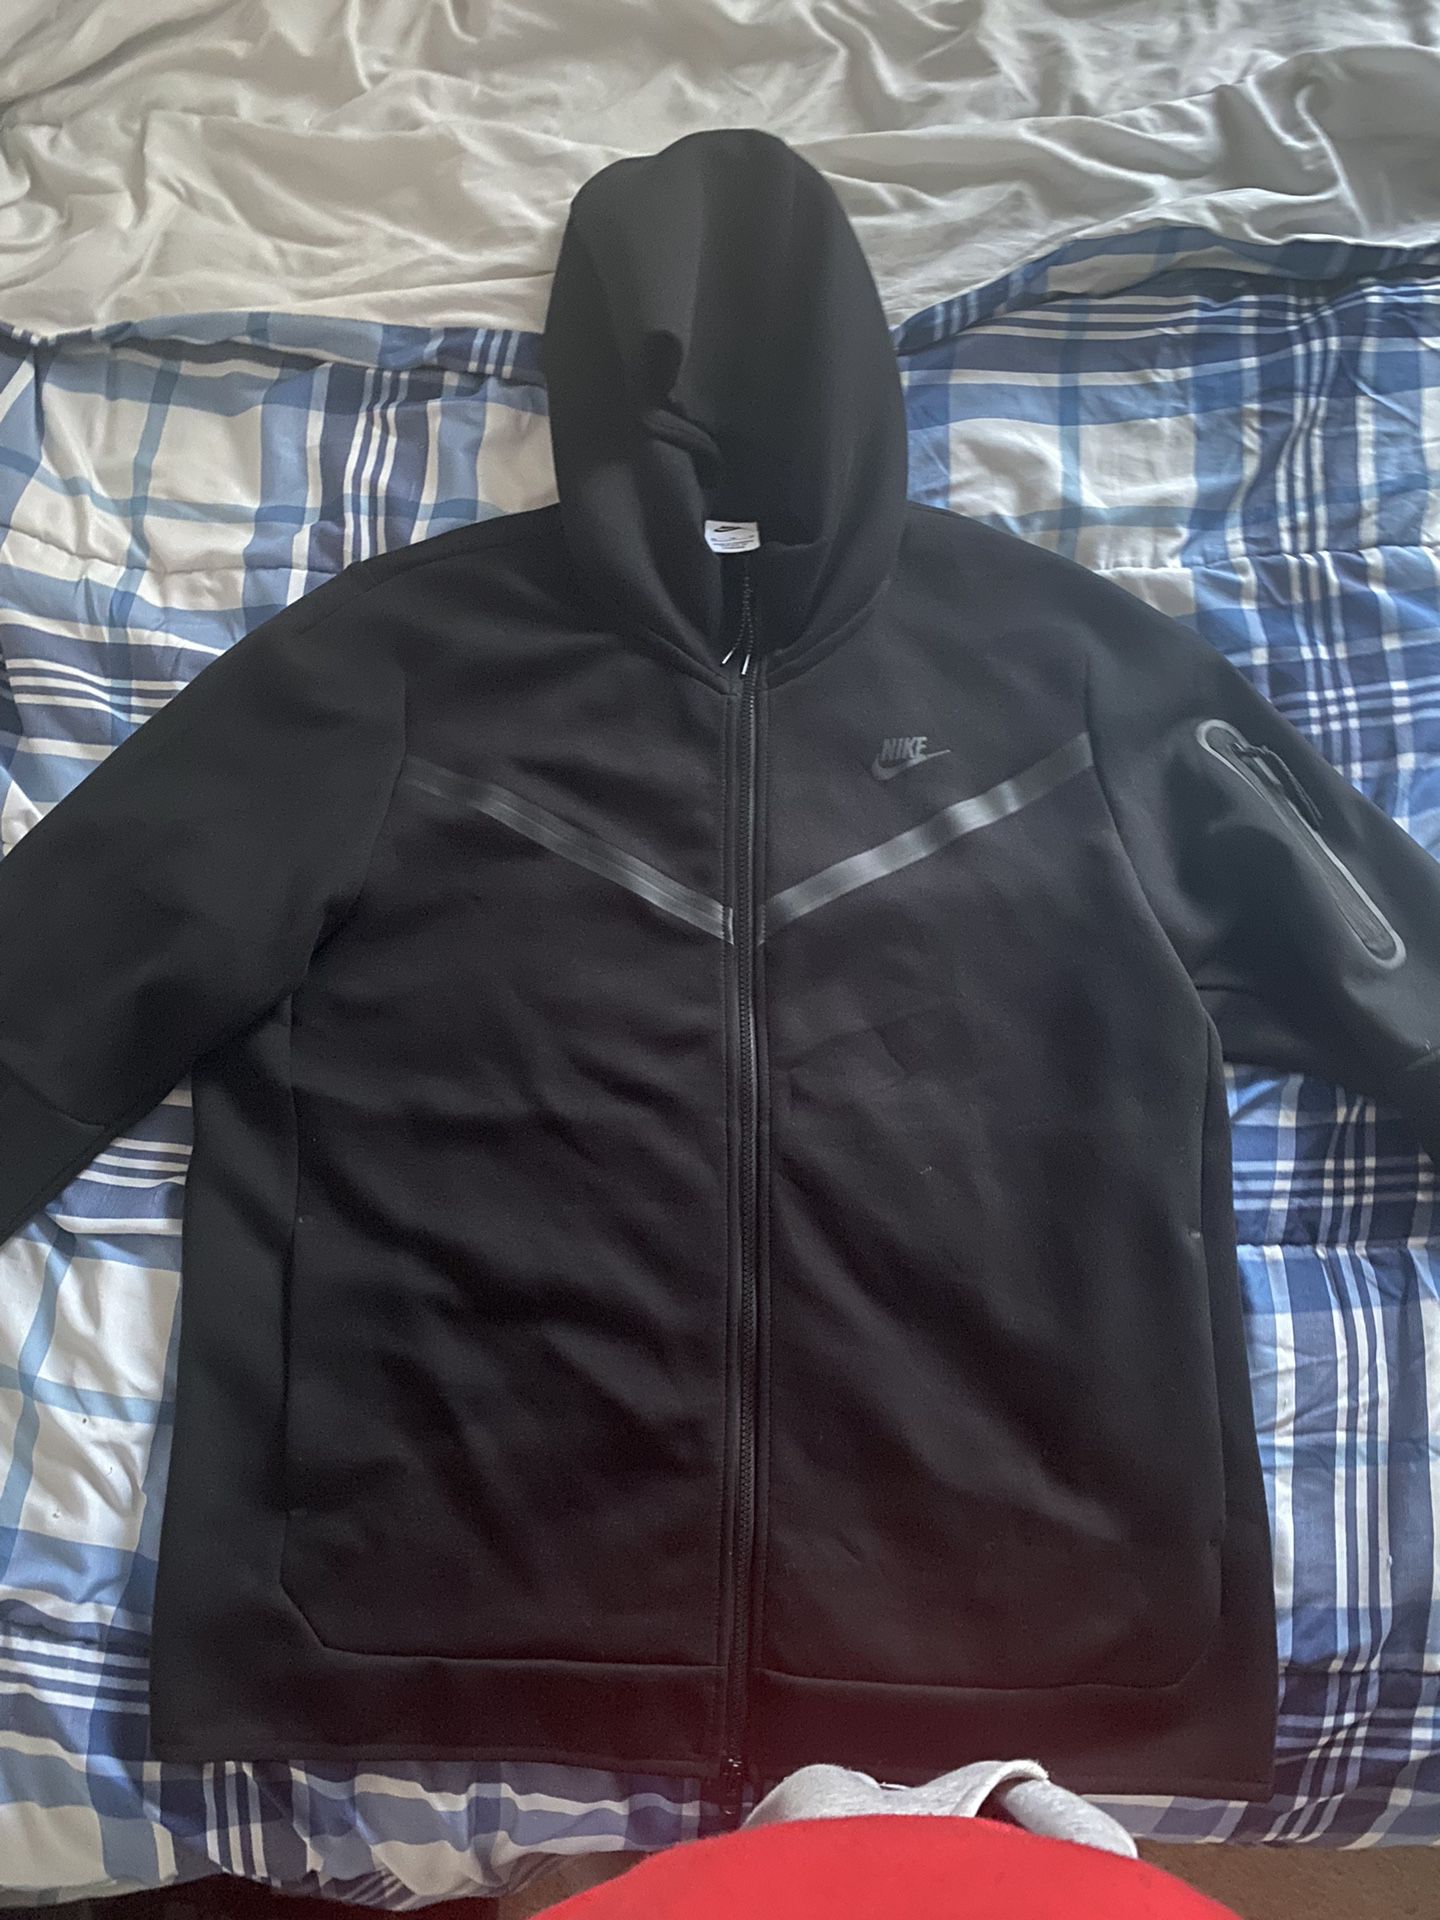 Black Nike Tech Sweatsuit Zip Up  Hoodie Men's Jacket XL